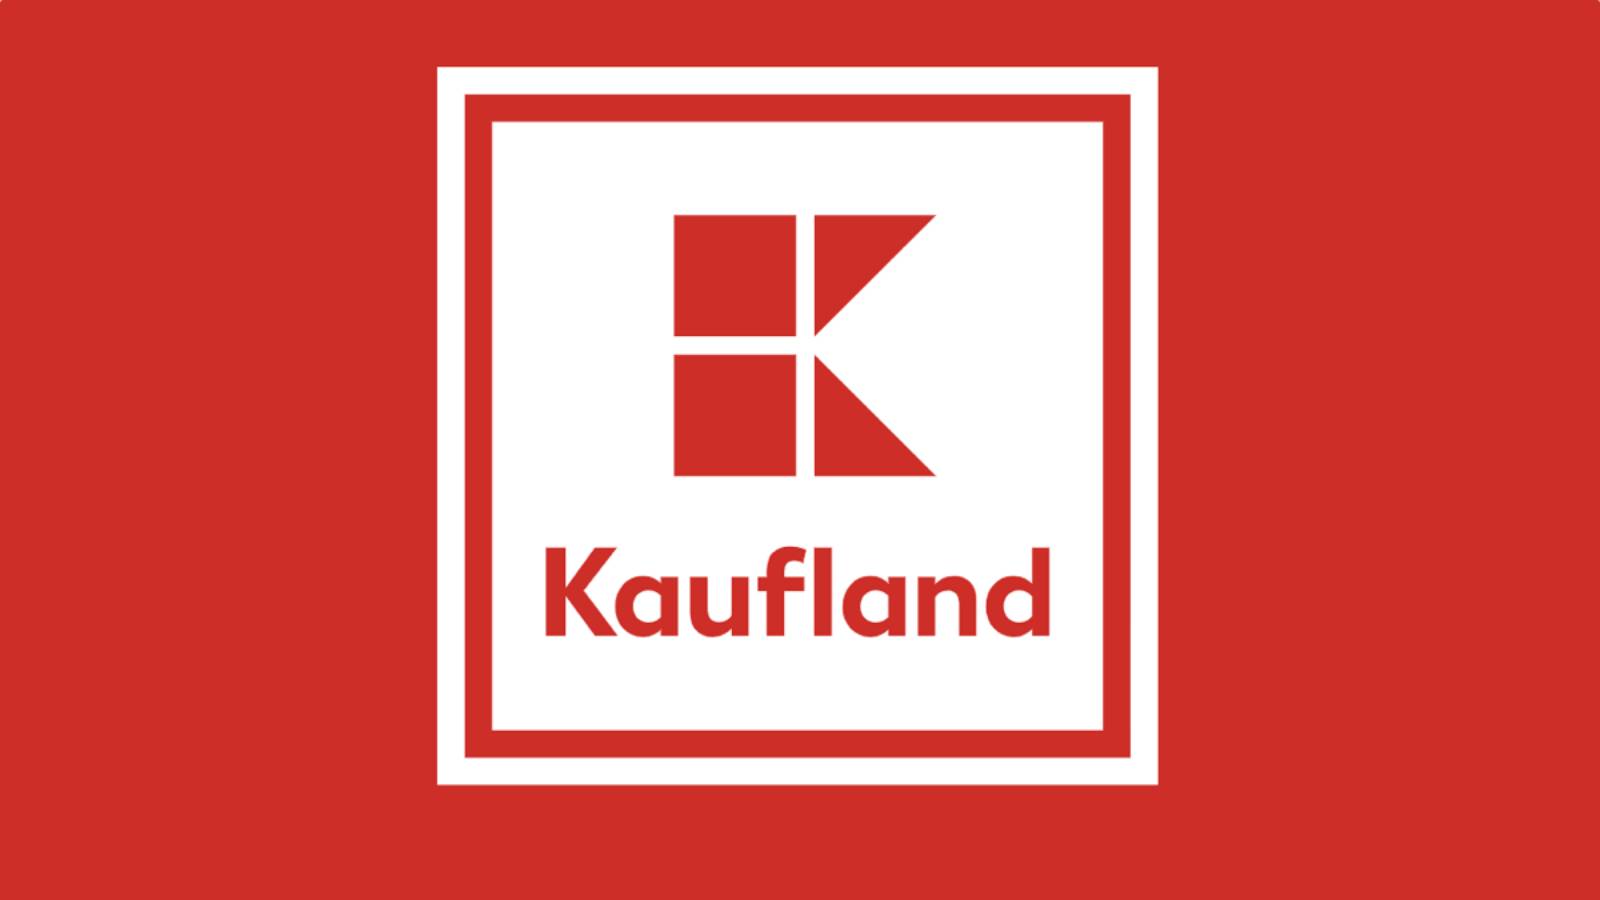 Kaufland festival